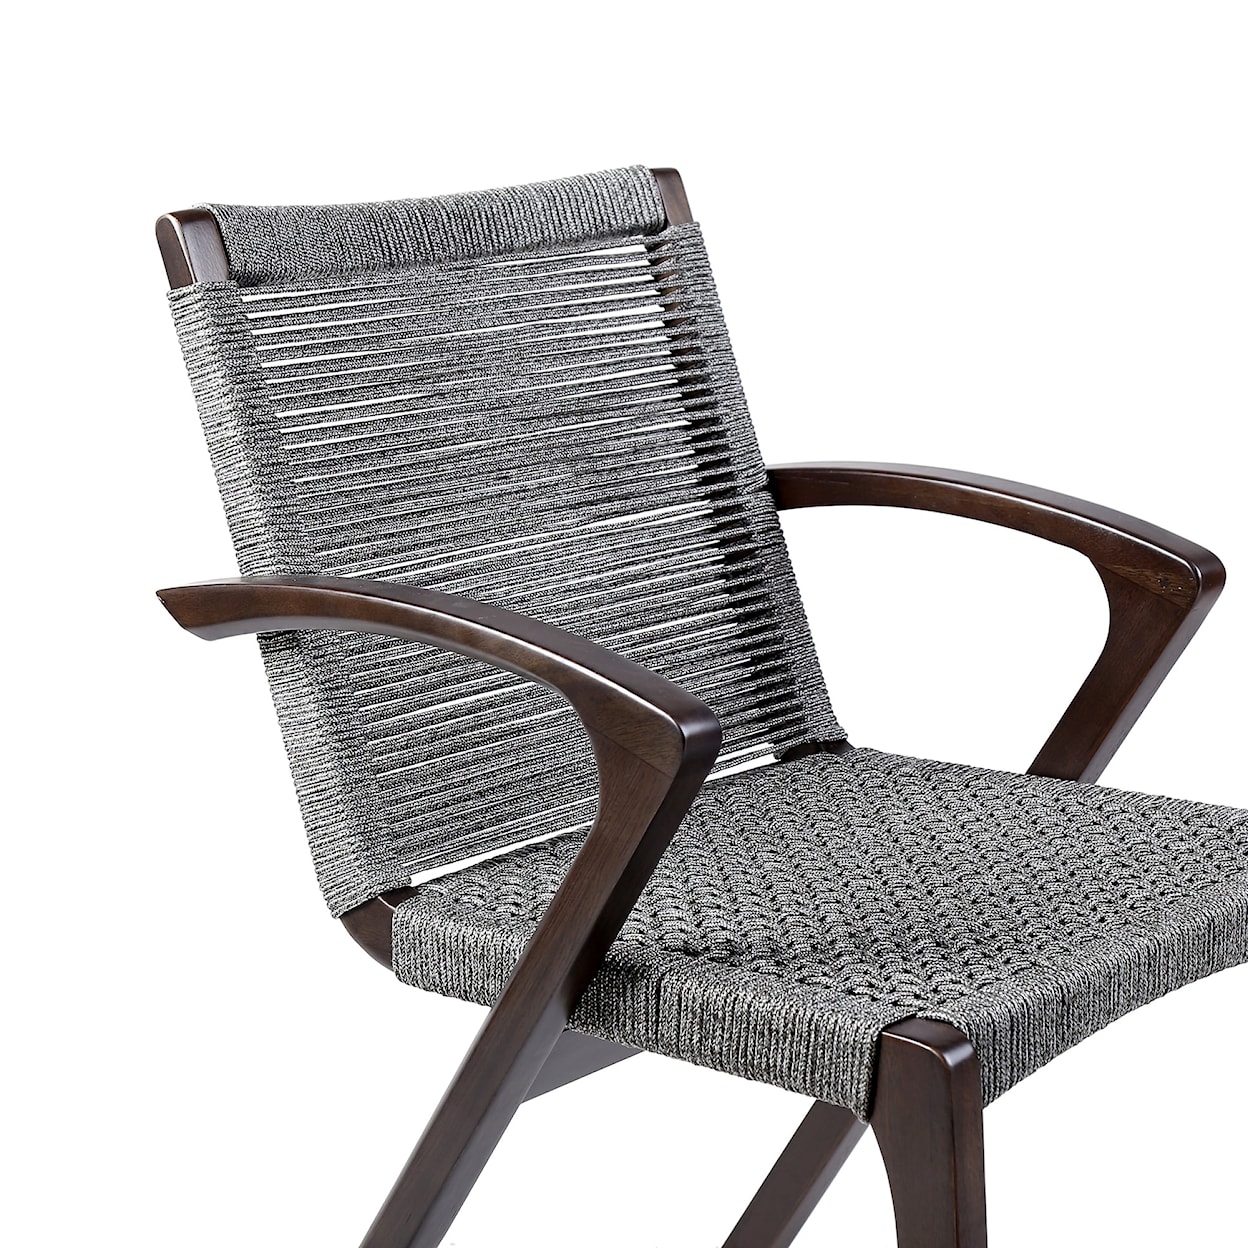 Armen Living Nabila Set of 2 Outdoor Arm Chairs